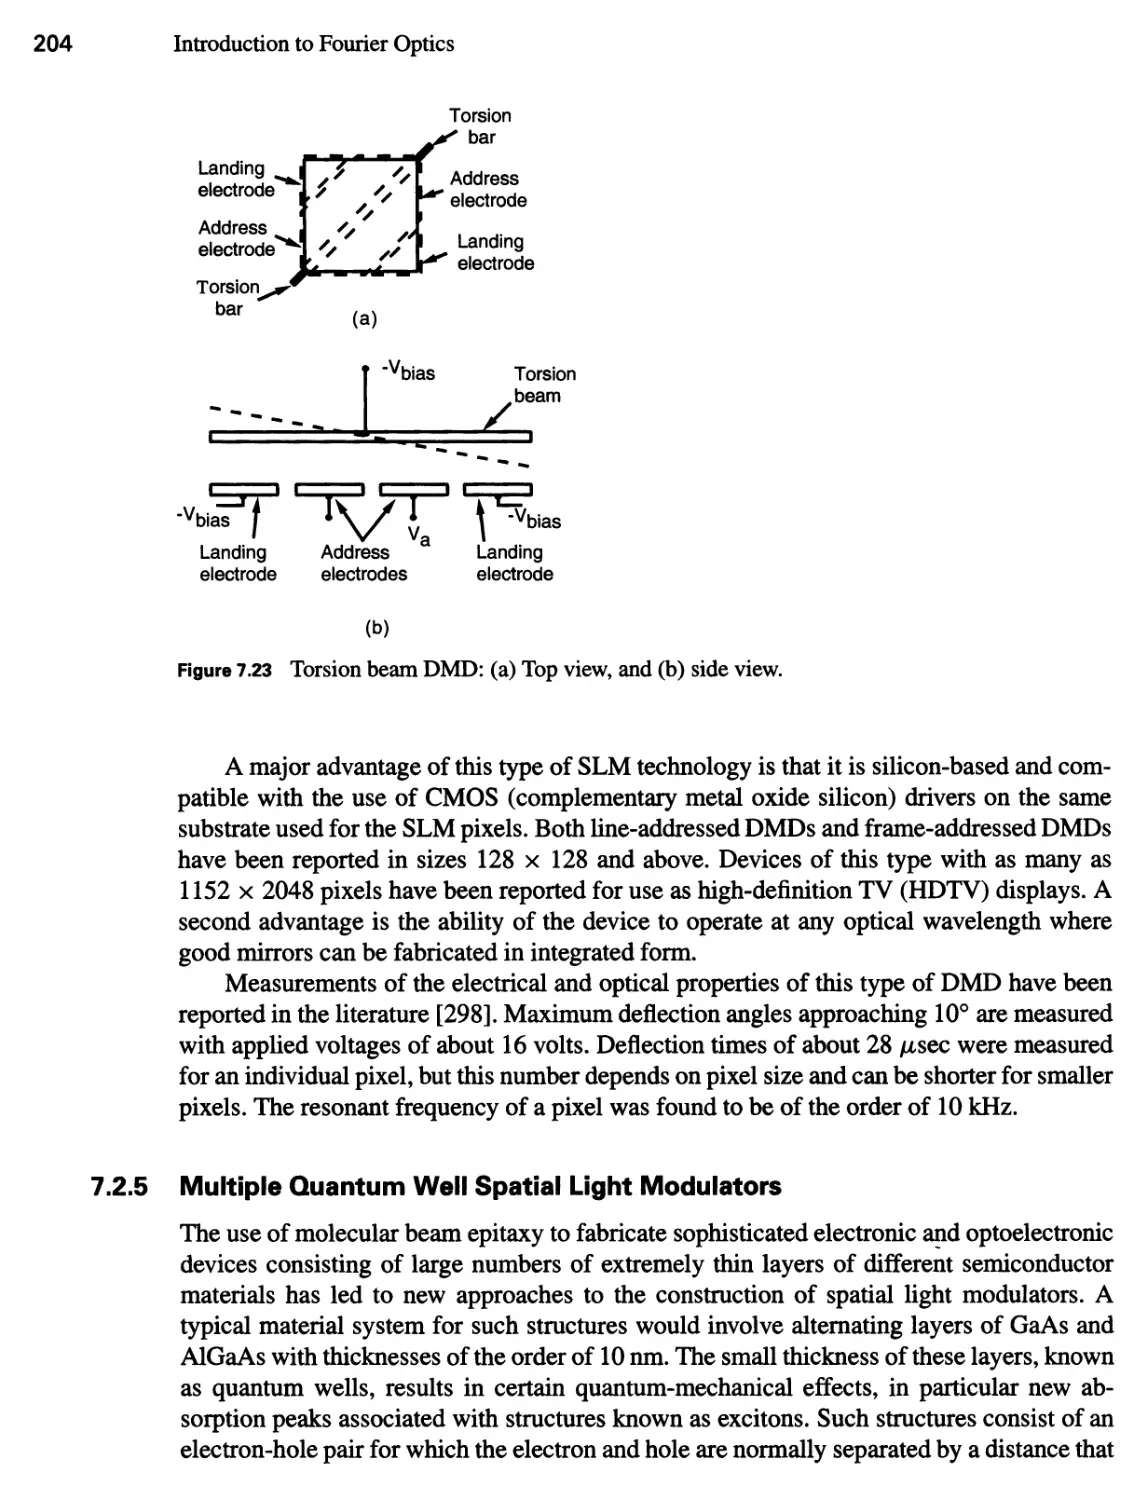 7.2.5 Multiple Quantum Well Spatial Light Modulators 204